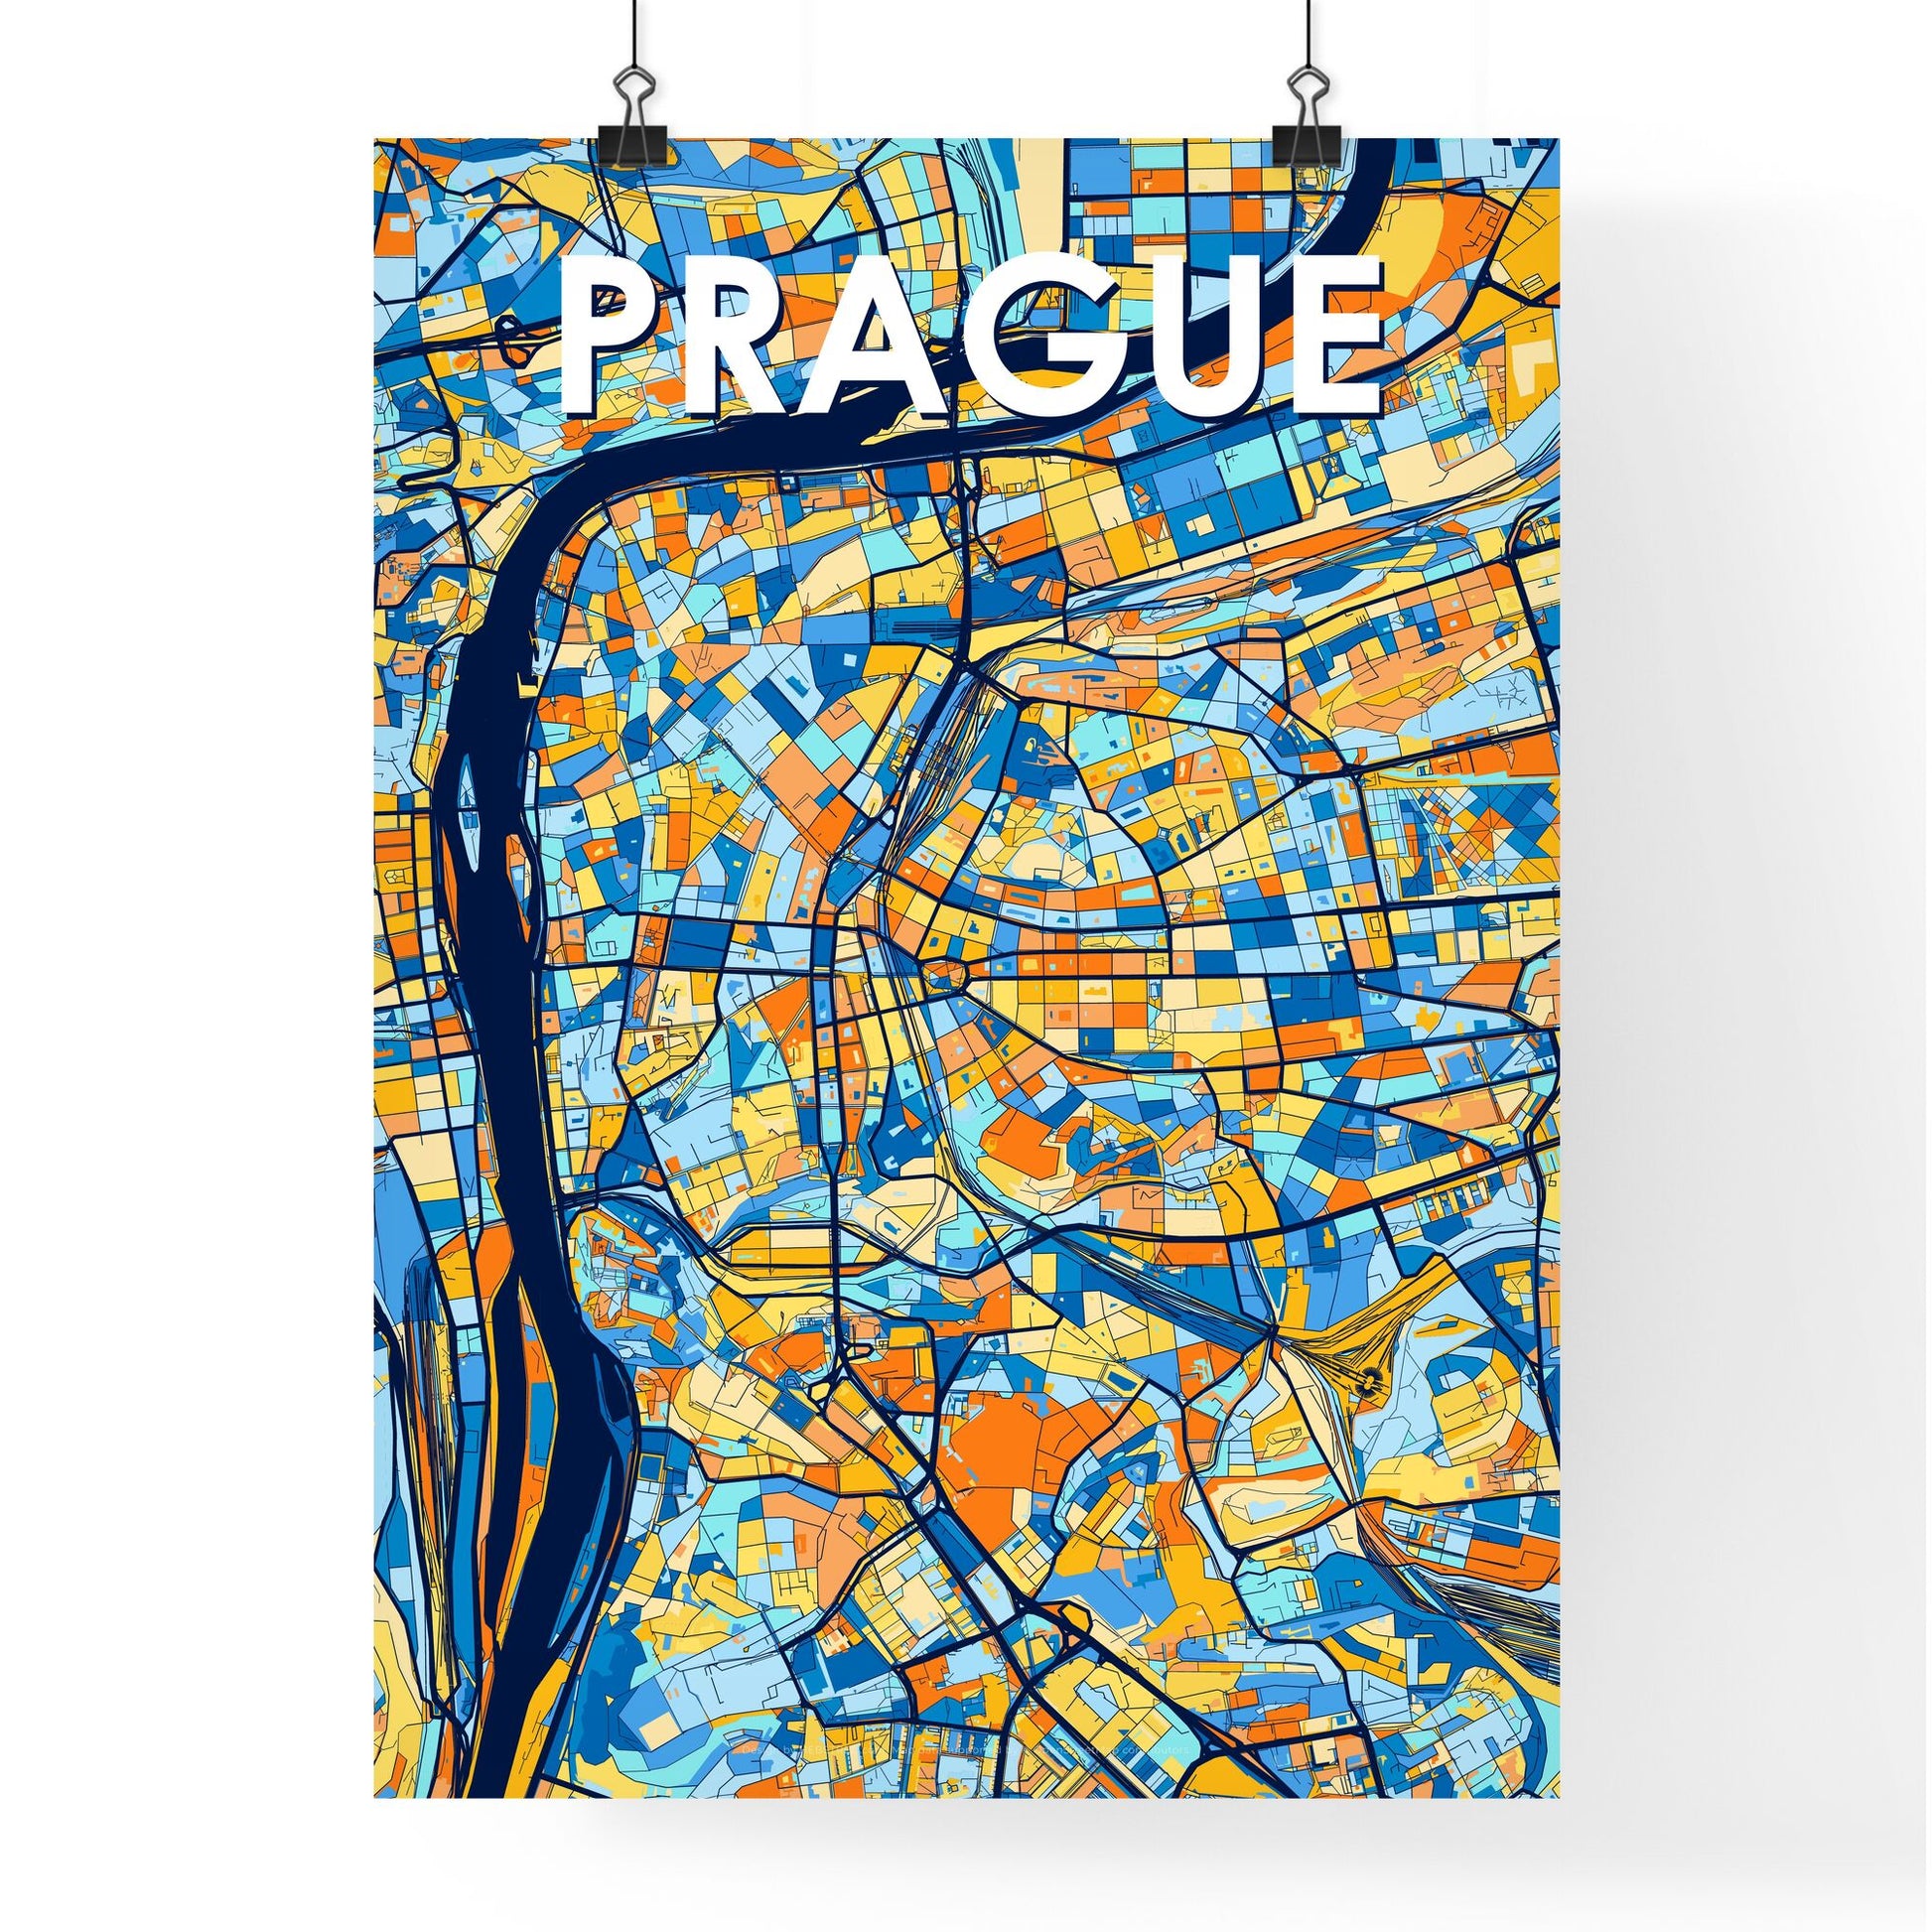 PRAGUE CZECHIA Vibrant Colorful Art Map Poster Blue Orange